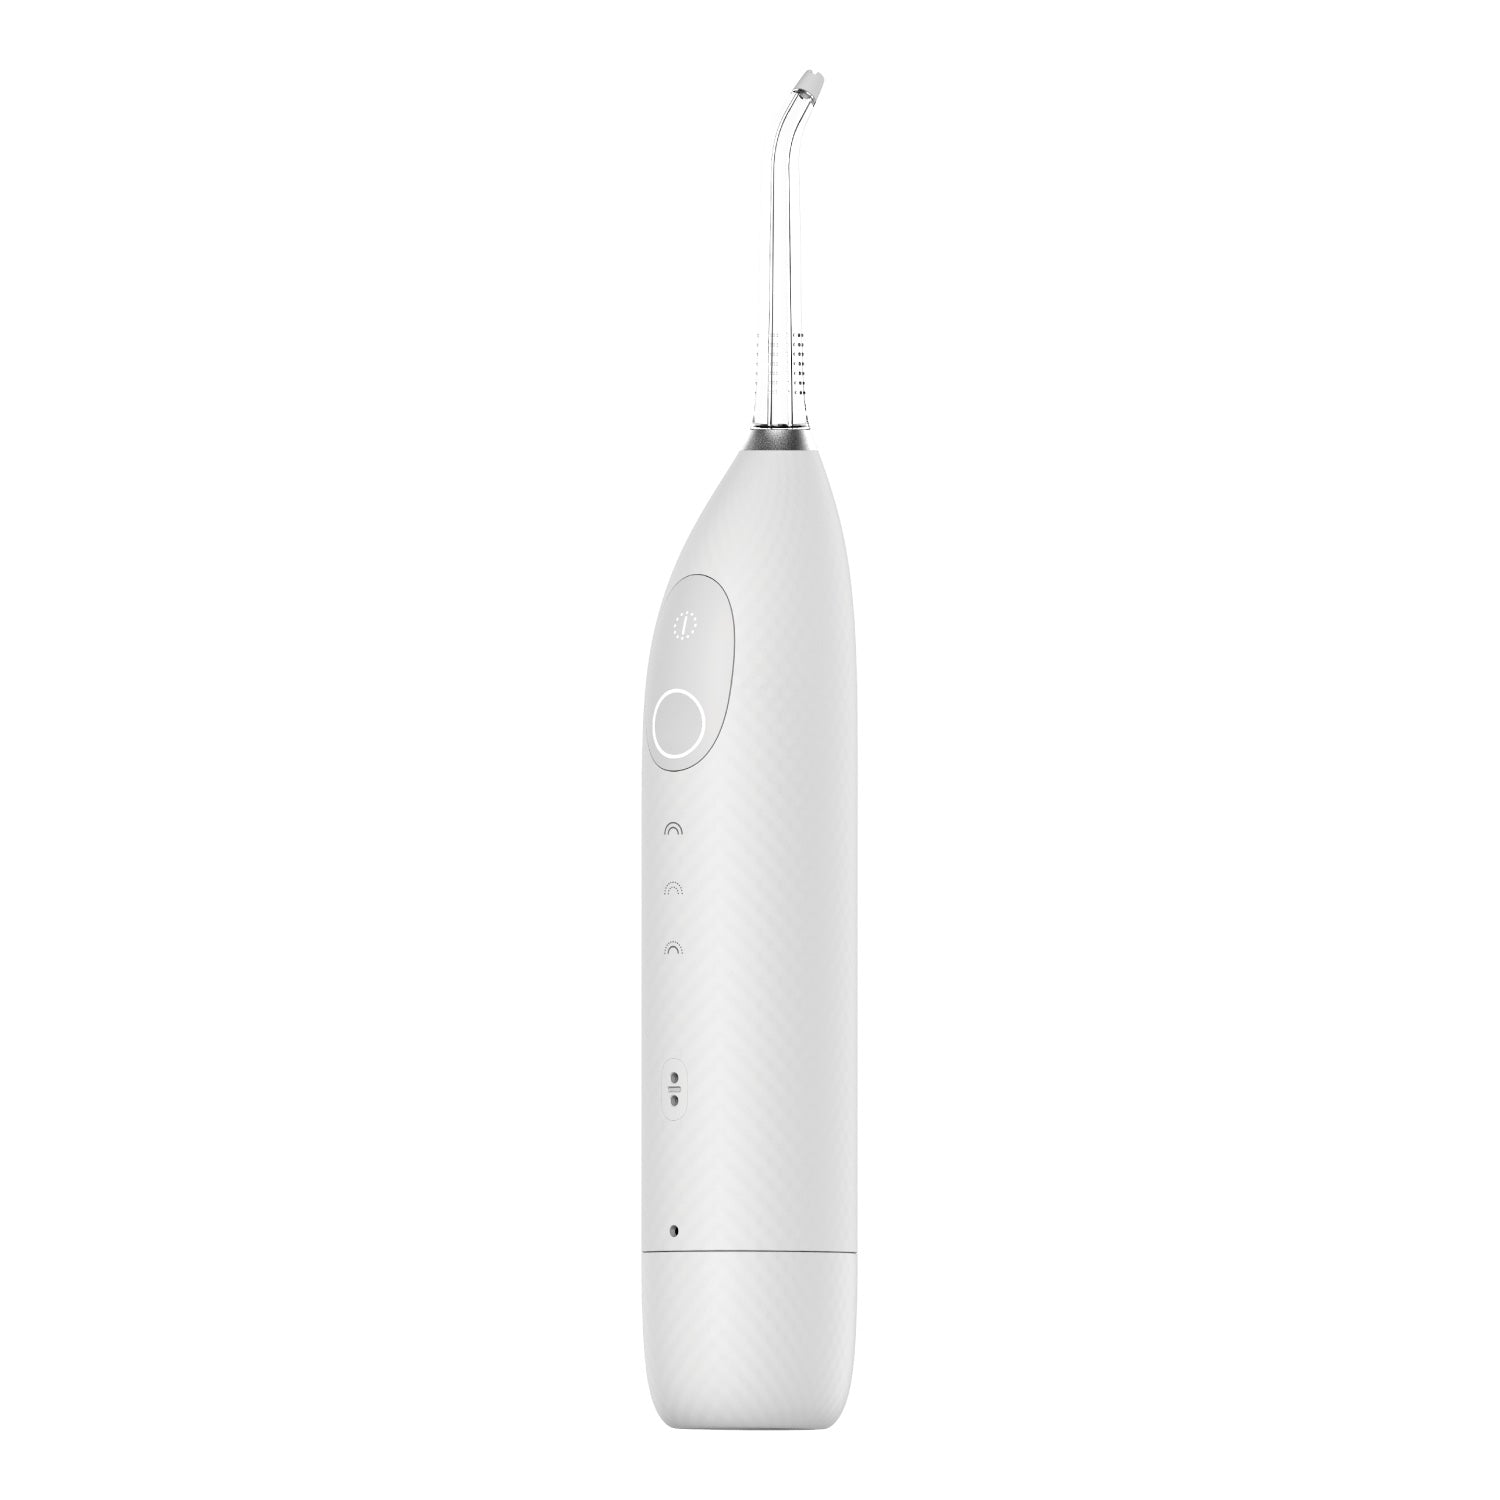 Oclean W1 Portable Dental Water Flosser-Dental Water Jets-Oclean Global Store